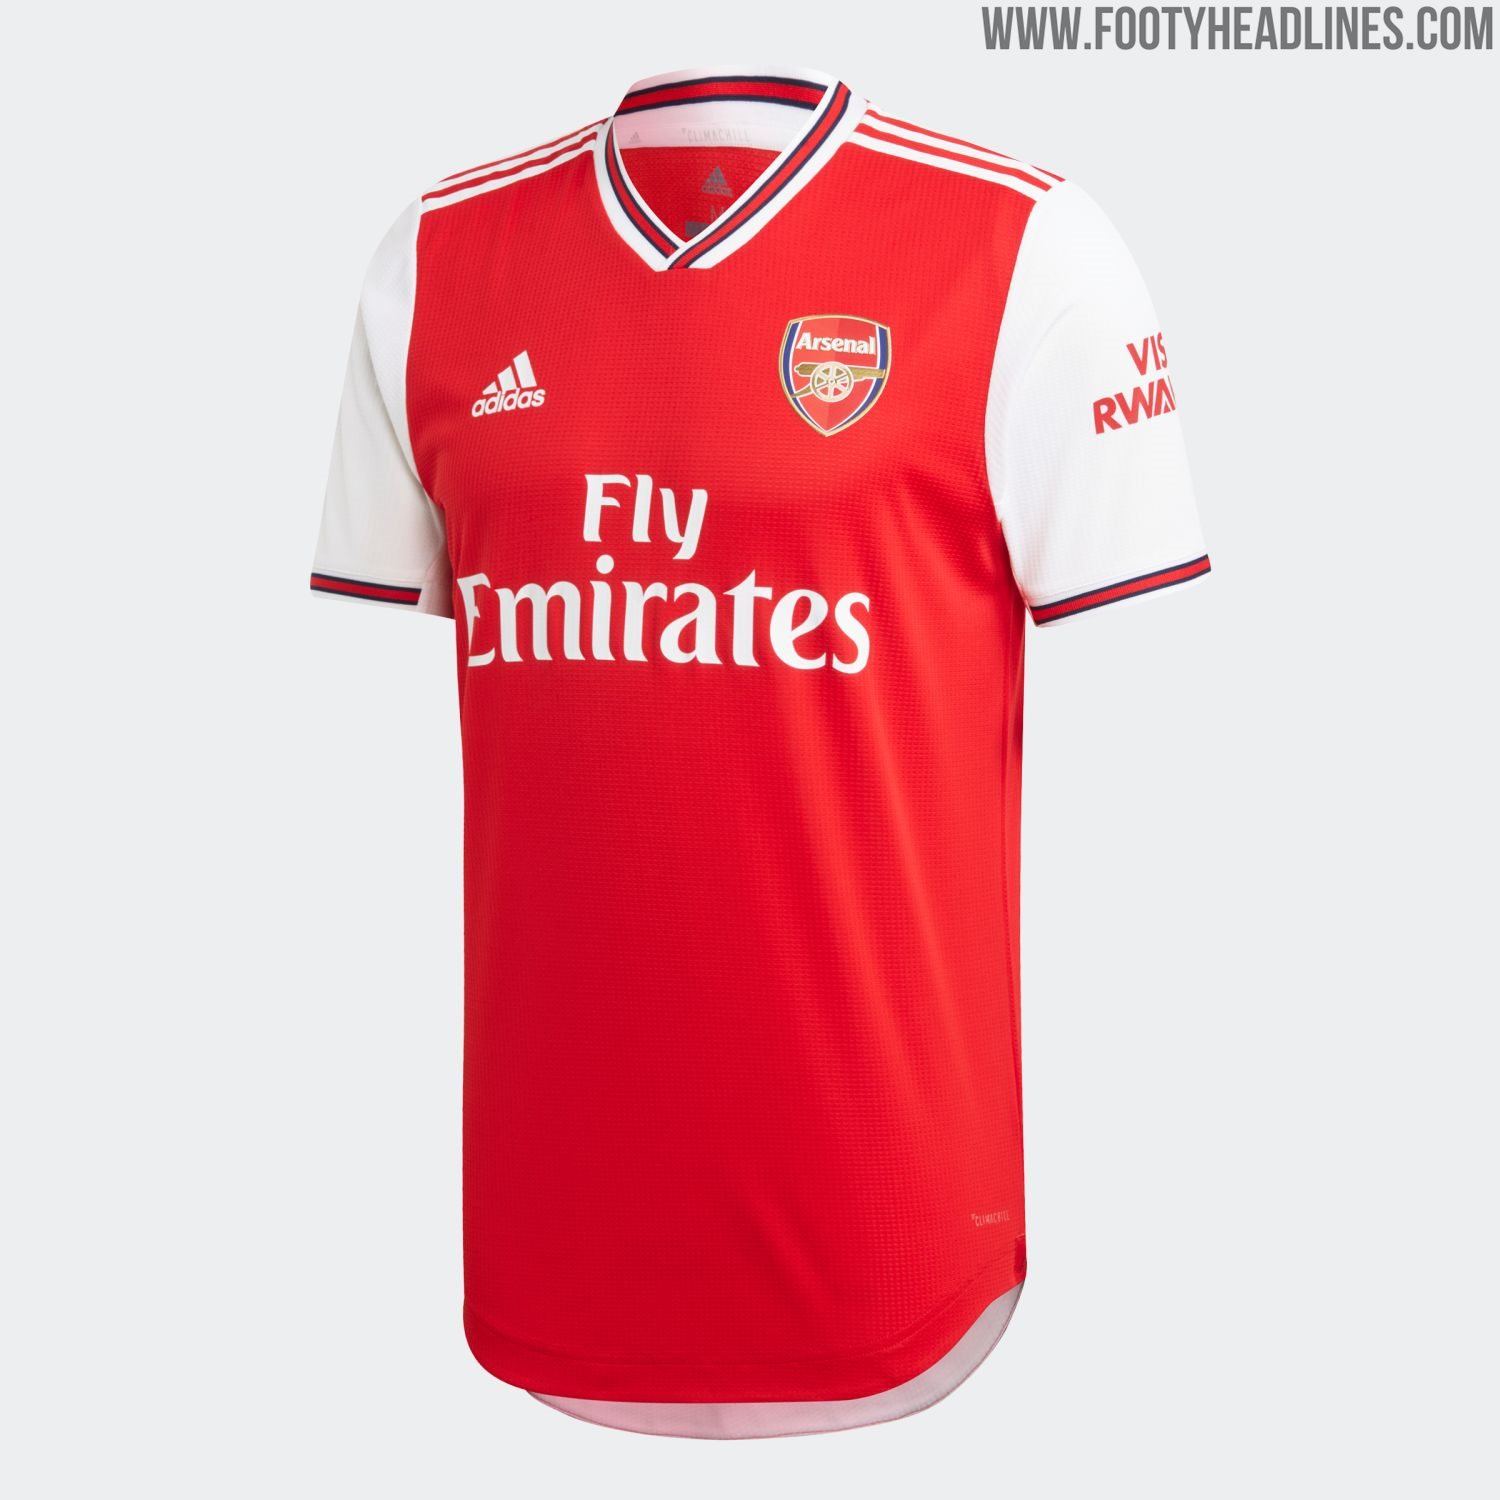 Best Set Of The Season? Adidas Arsenal 19-20 Home, & Kits Released - Goodbye Puma - Footy Headlines